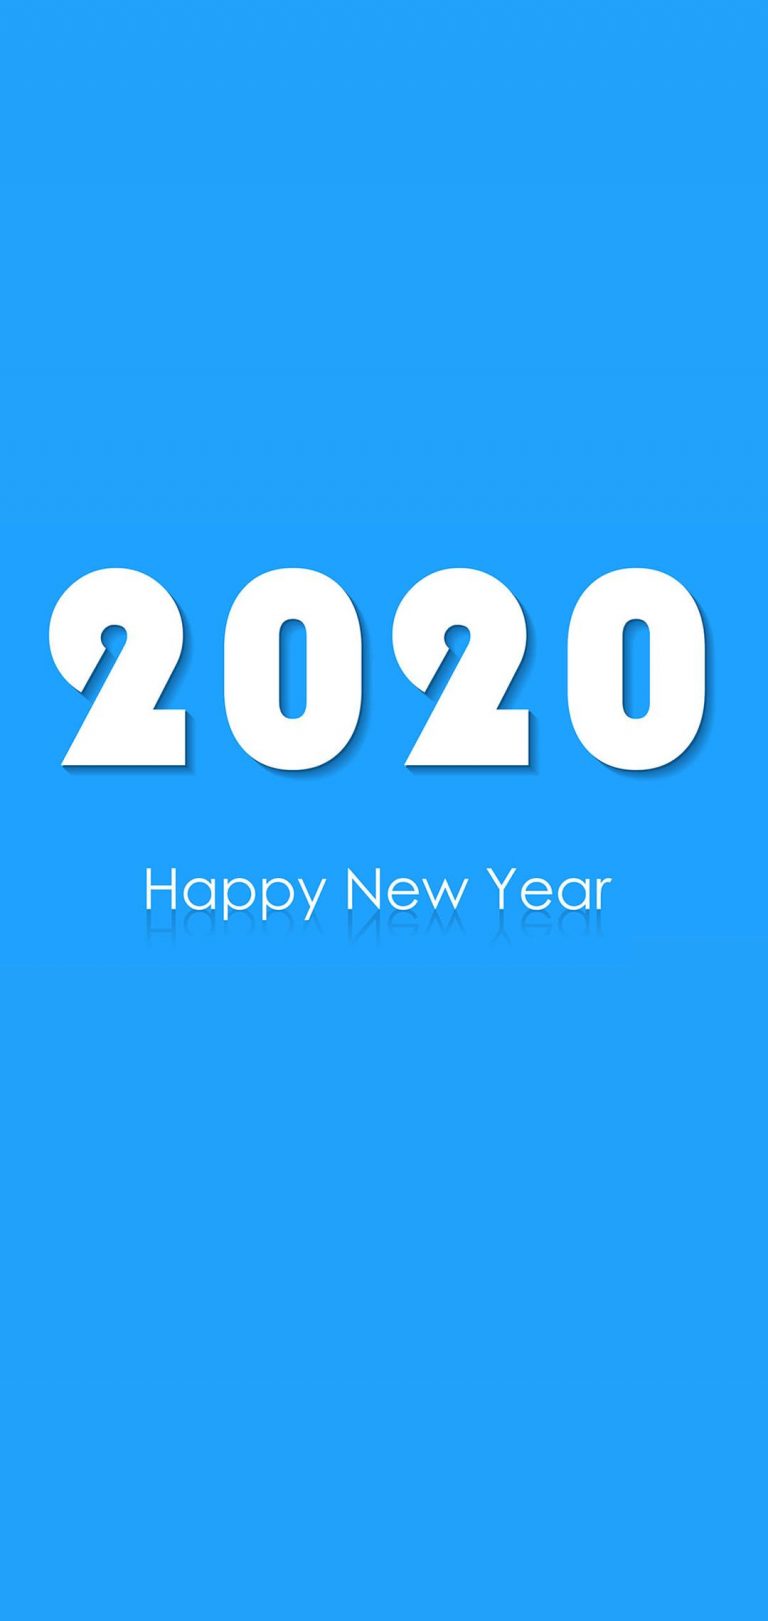 Happy New Year 2020 Phone Wallpaper 09 - [1080x2280]